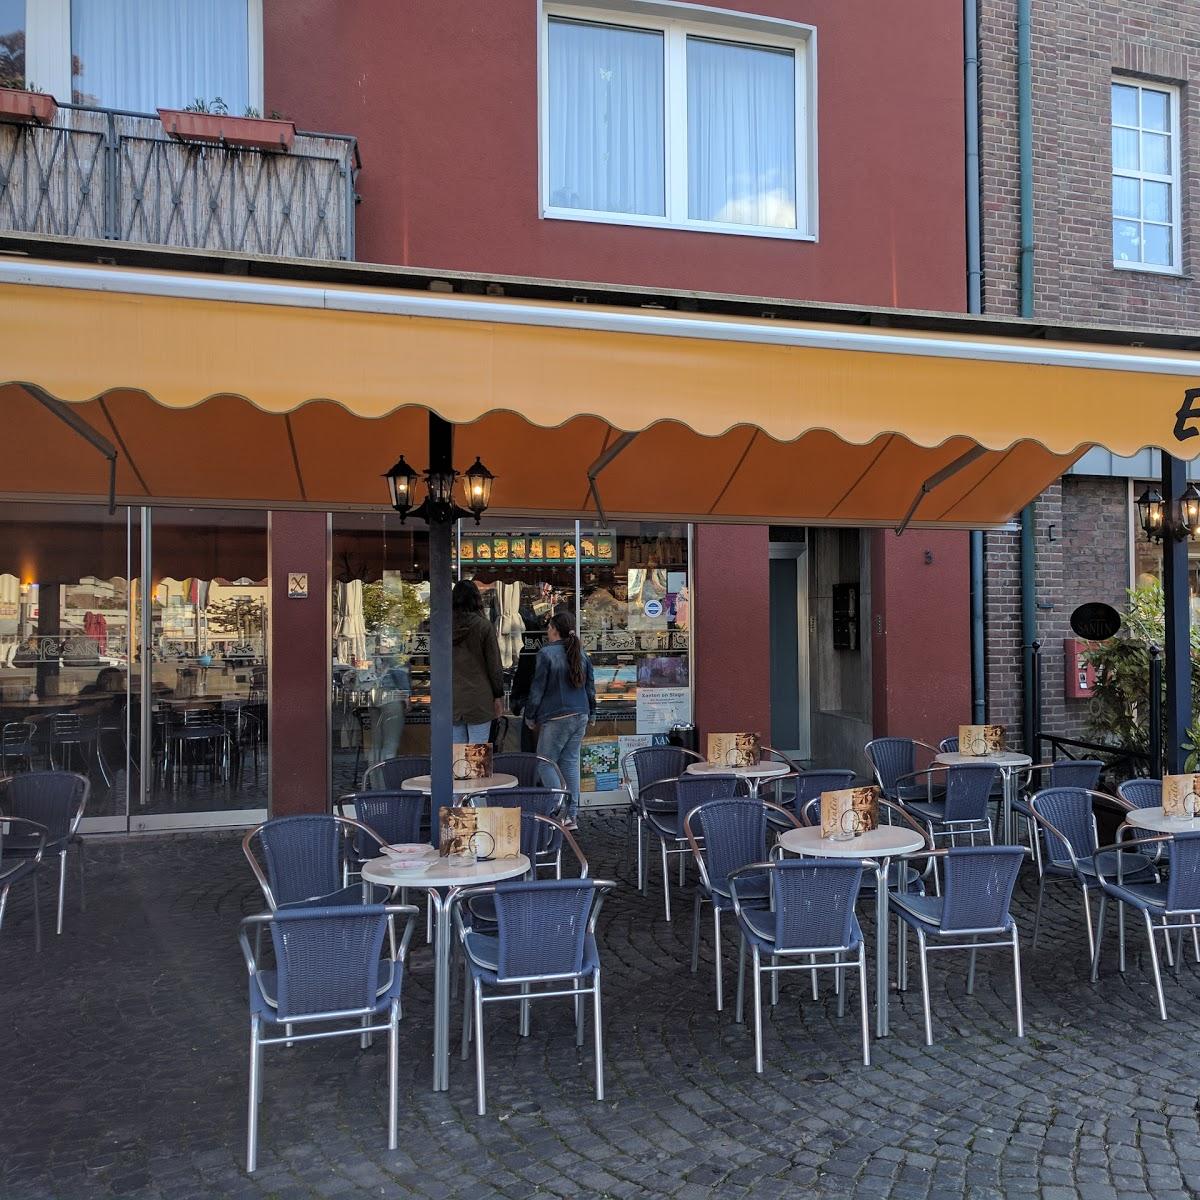 Restaurant "Eiscafé Santin" in Xanten